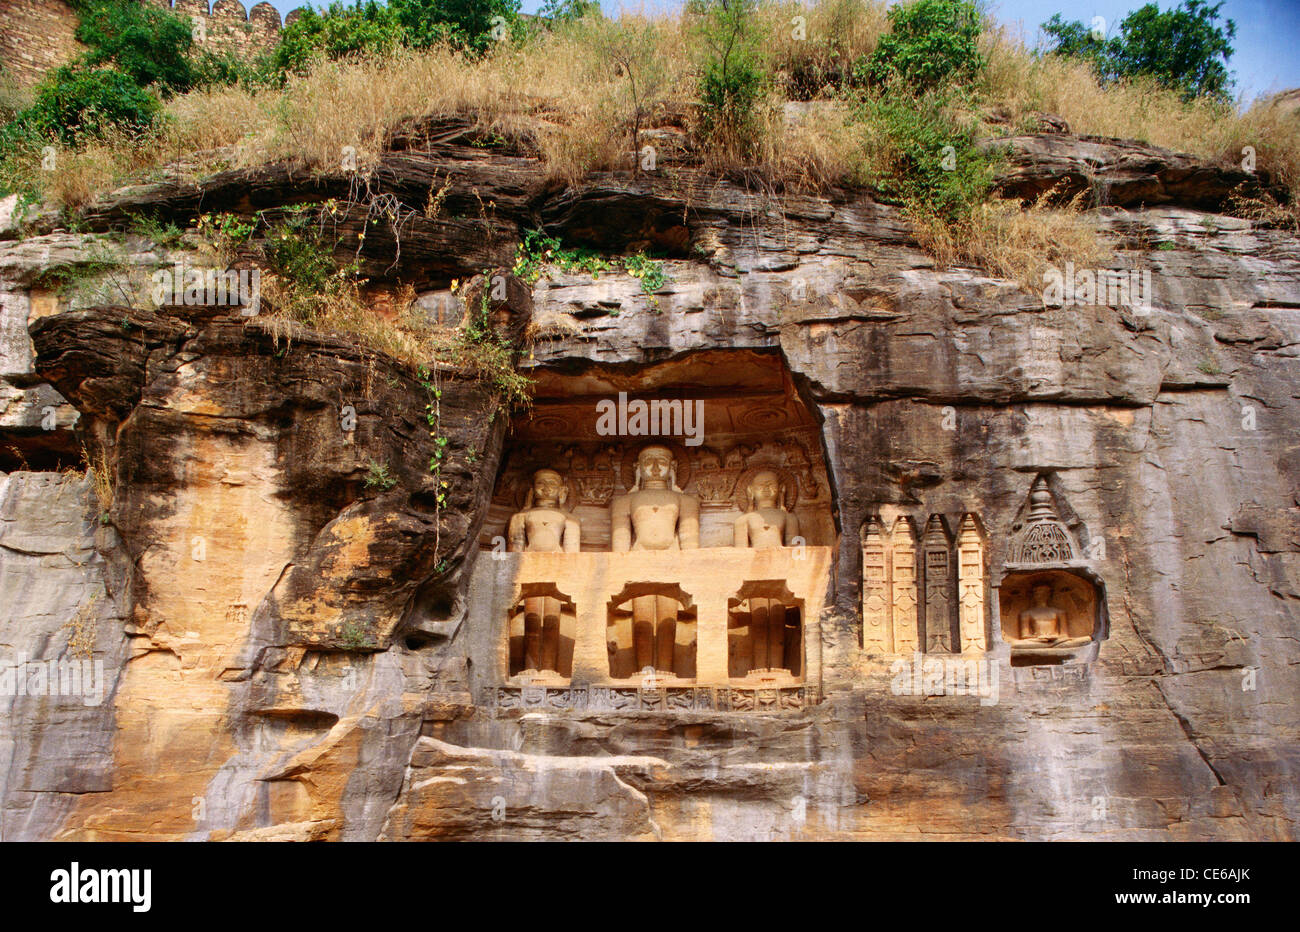 Gopachal rock cut Jain monuments ; Gopachal Parvat Jaina monuments ; Gwalior Fort ; Gwalior ; Madhya Pradesh ; India ; Asia Stock Photo